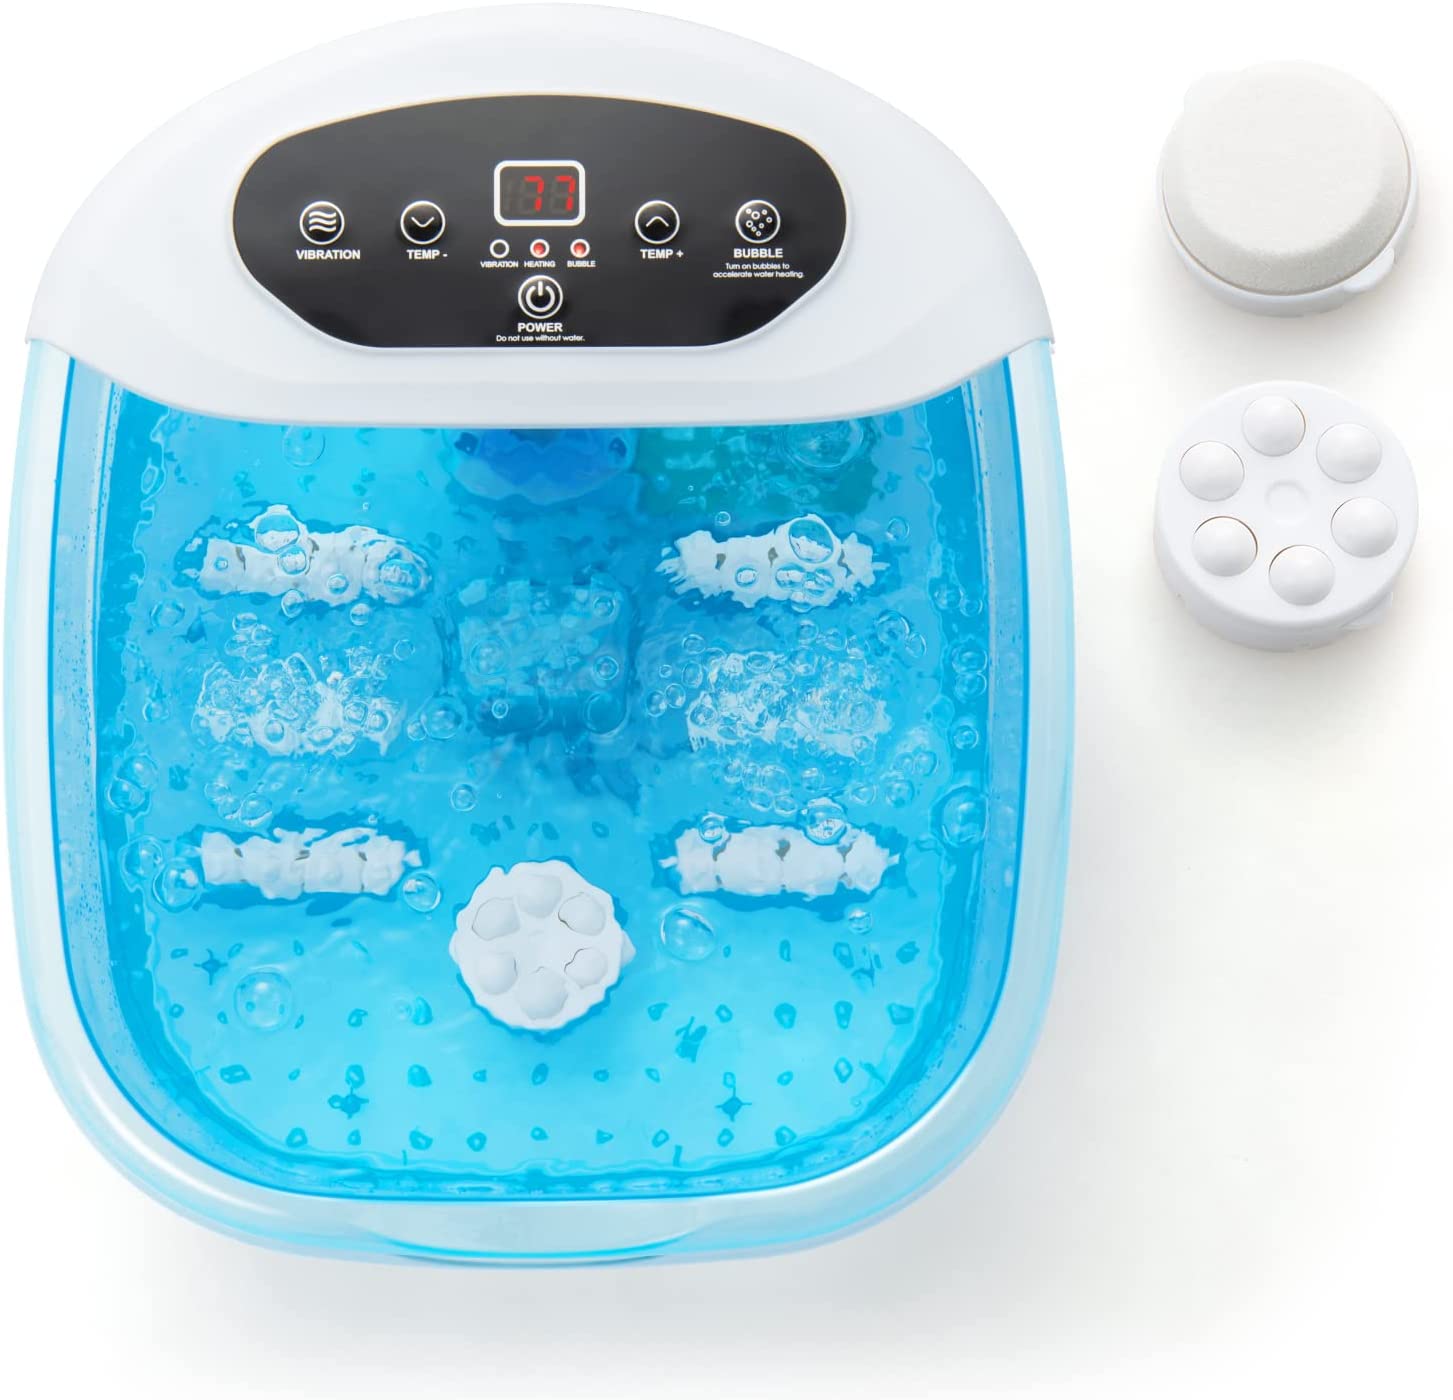 Giantex Foot Spa with Heat and Massage - Feet Bath Soak Tub w/Bubble, Vibration, Removable Pedicure Stone